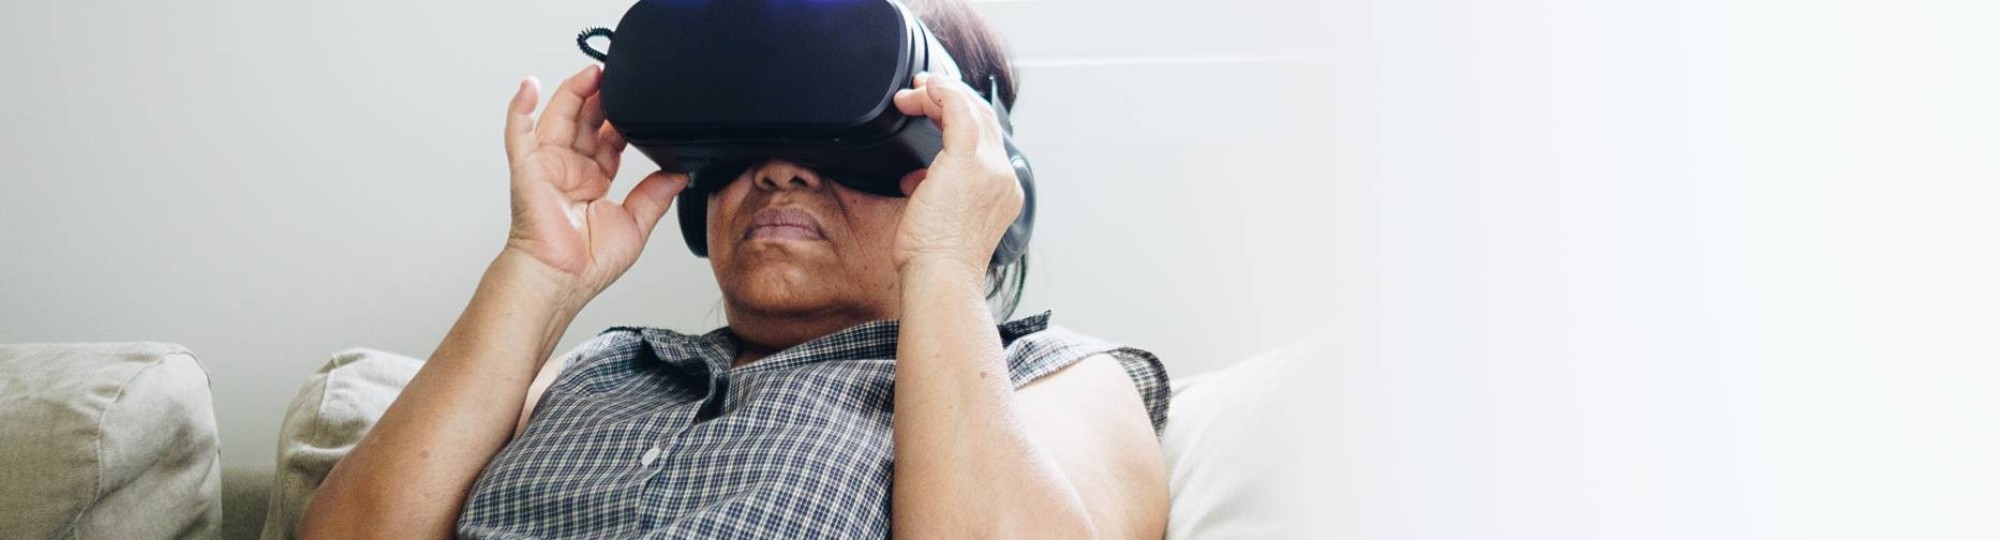 virtual reality, ouder persoon met VR-bril